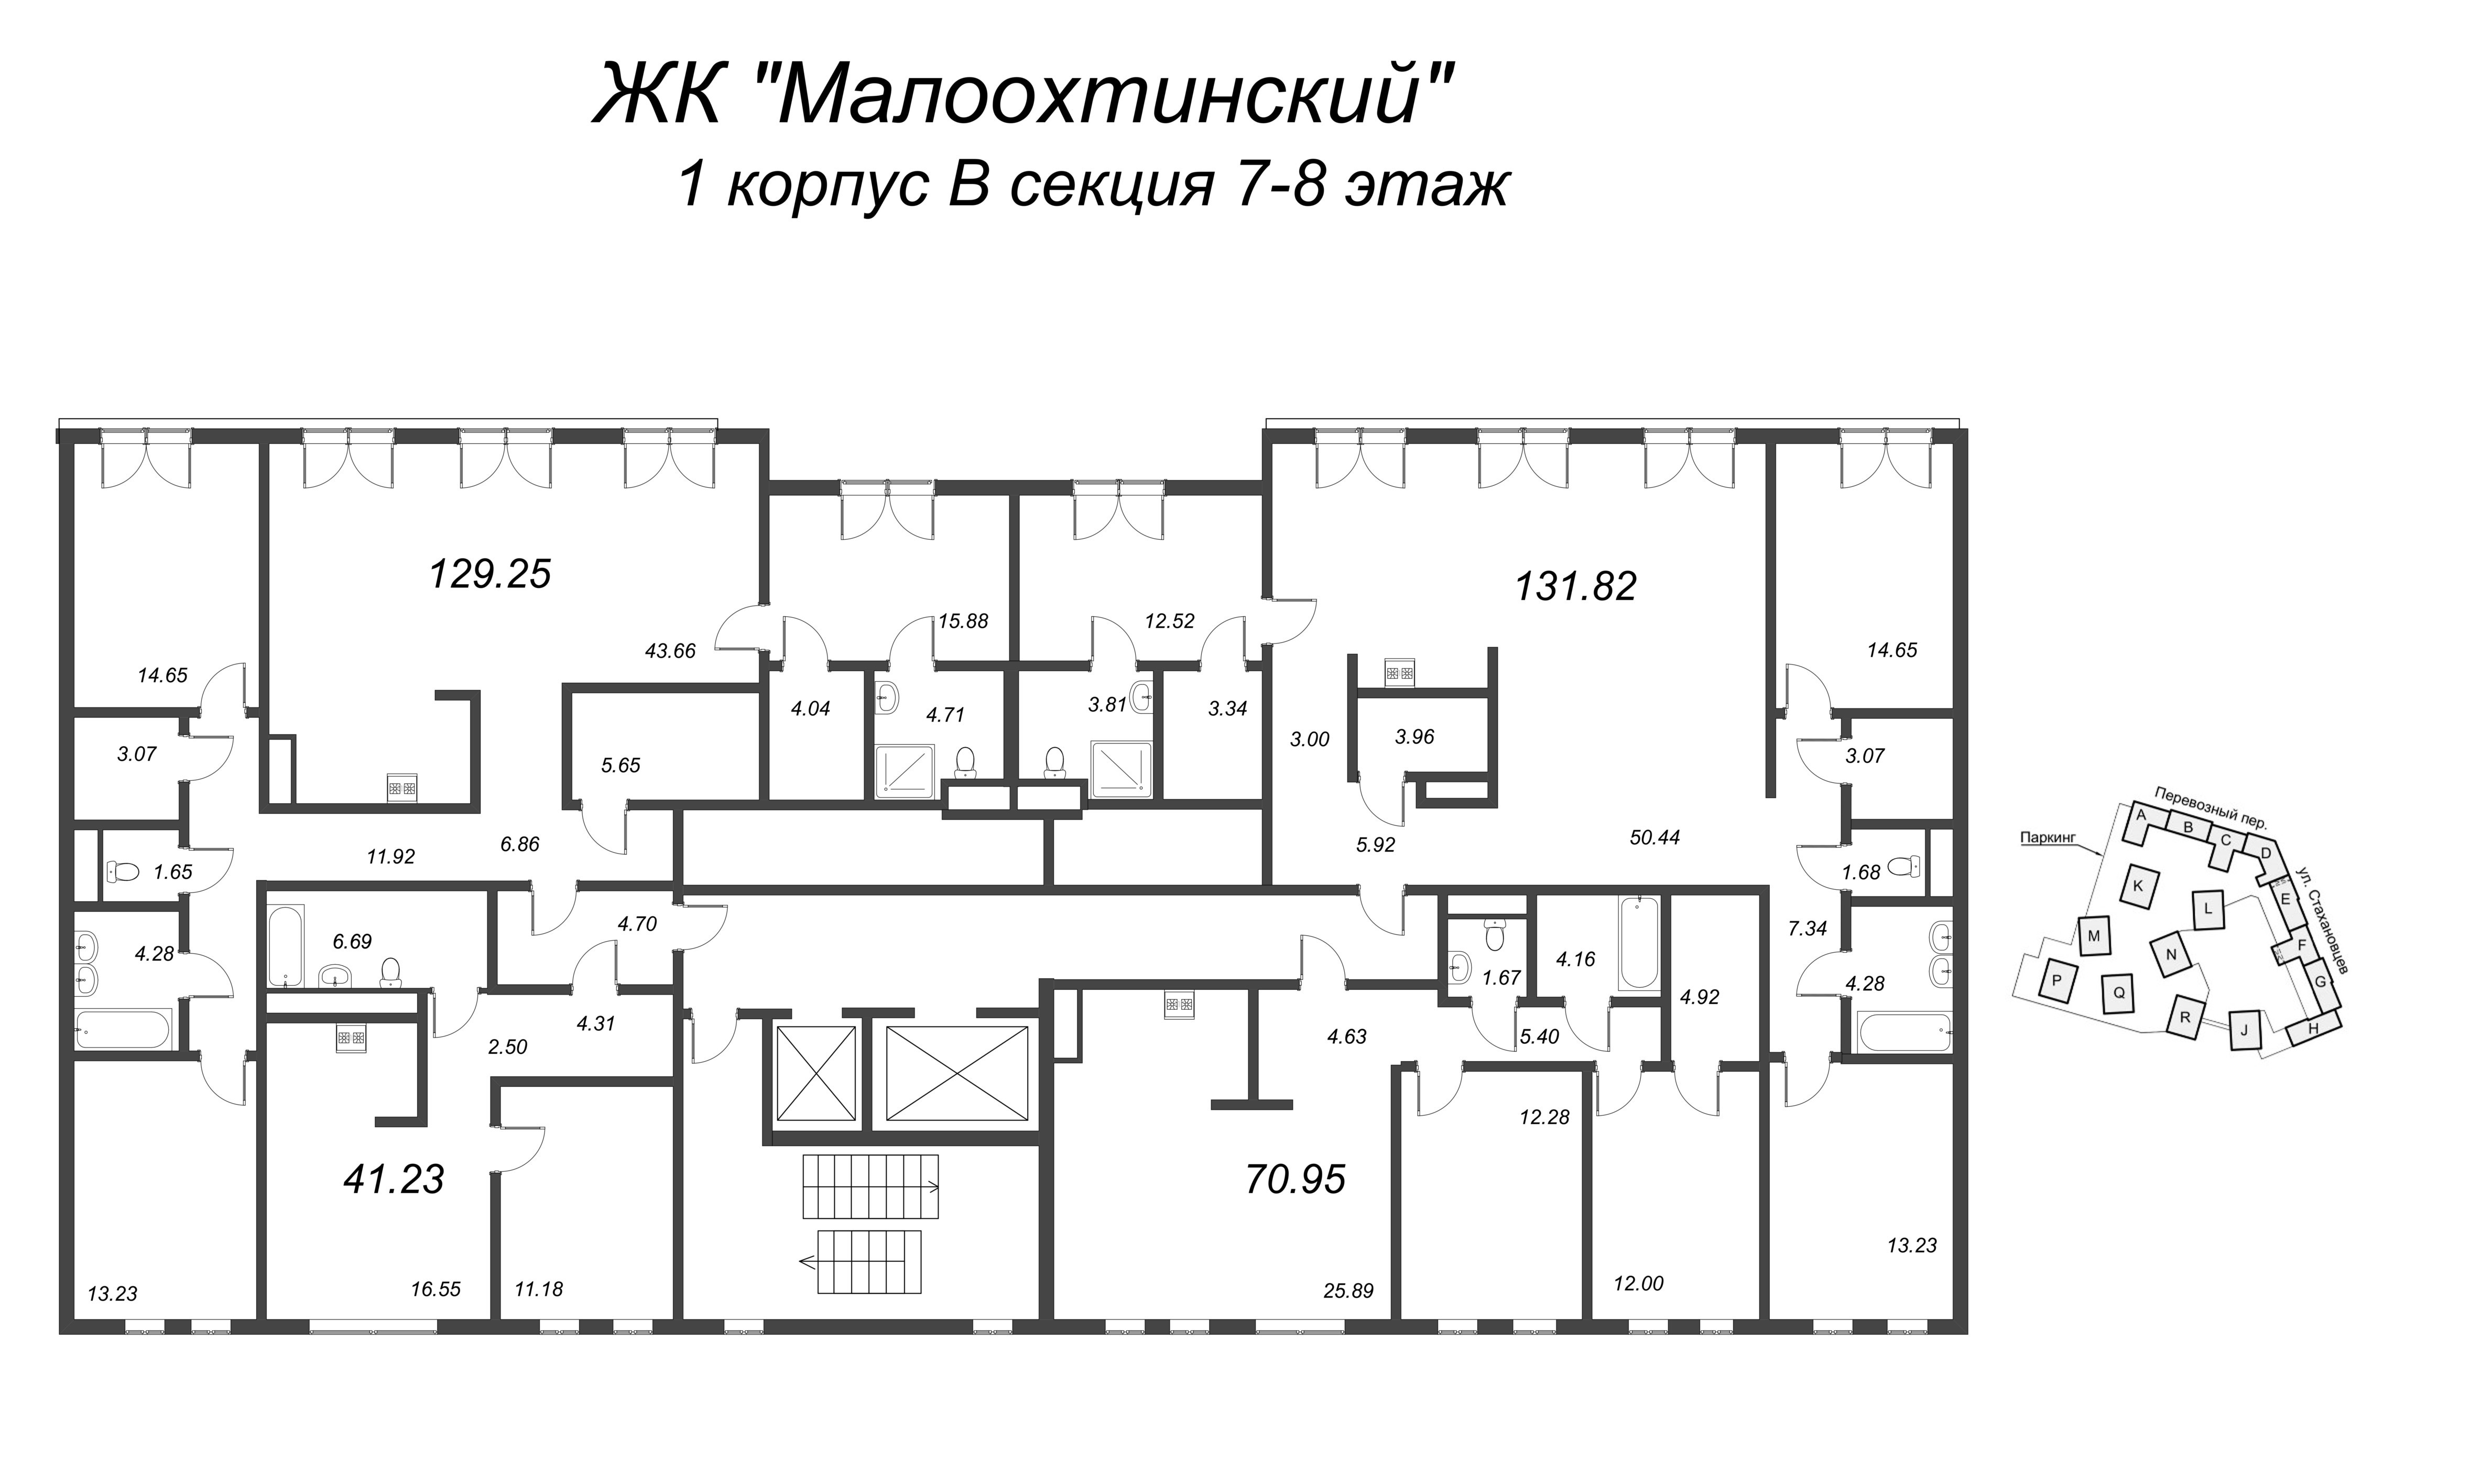 4-комнатная (Евро) квартира, 127 м² - планировка этажа